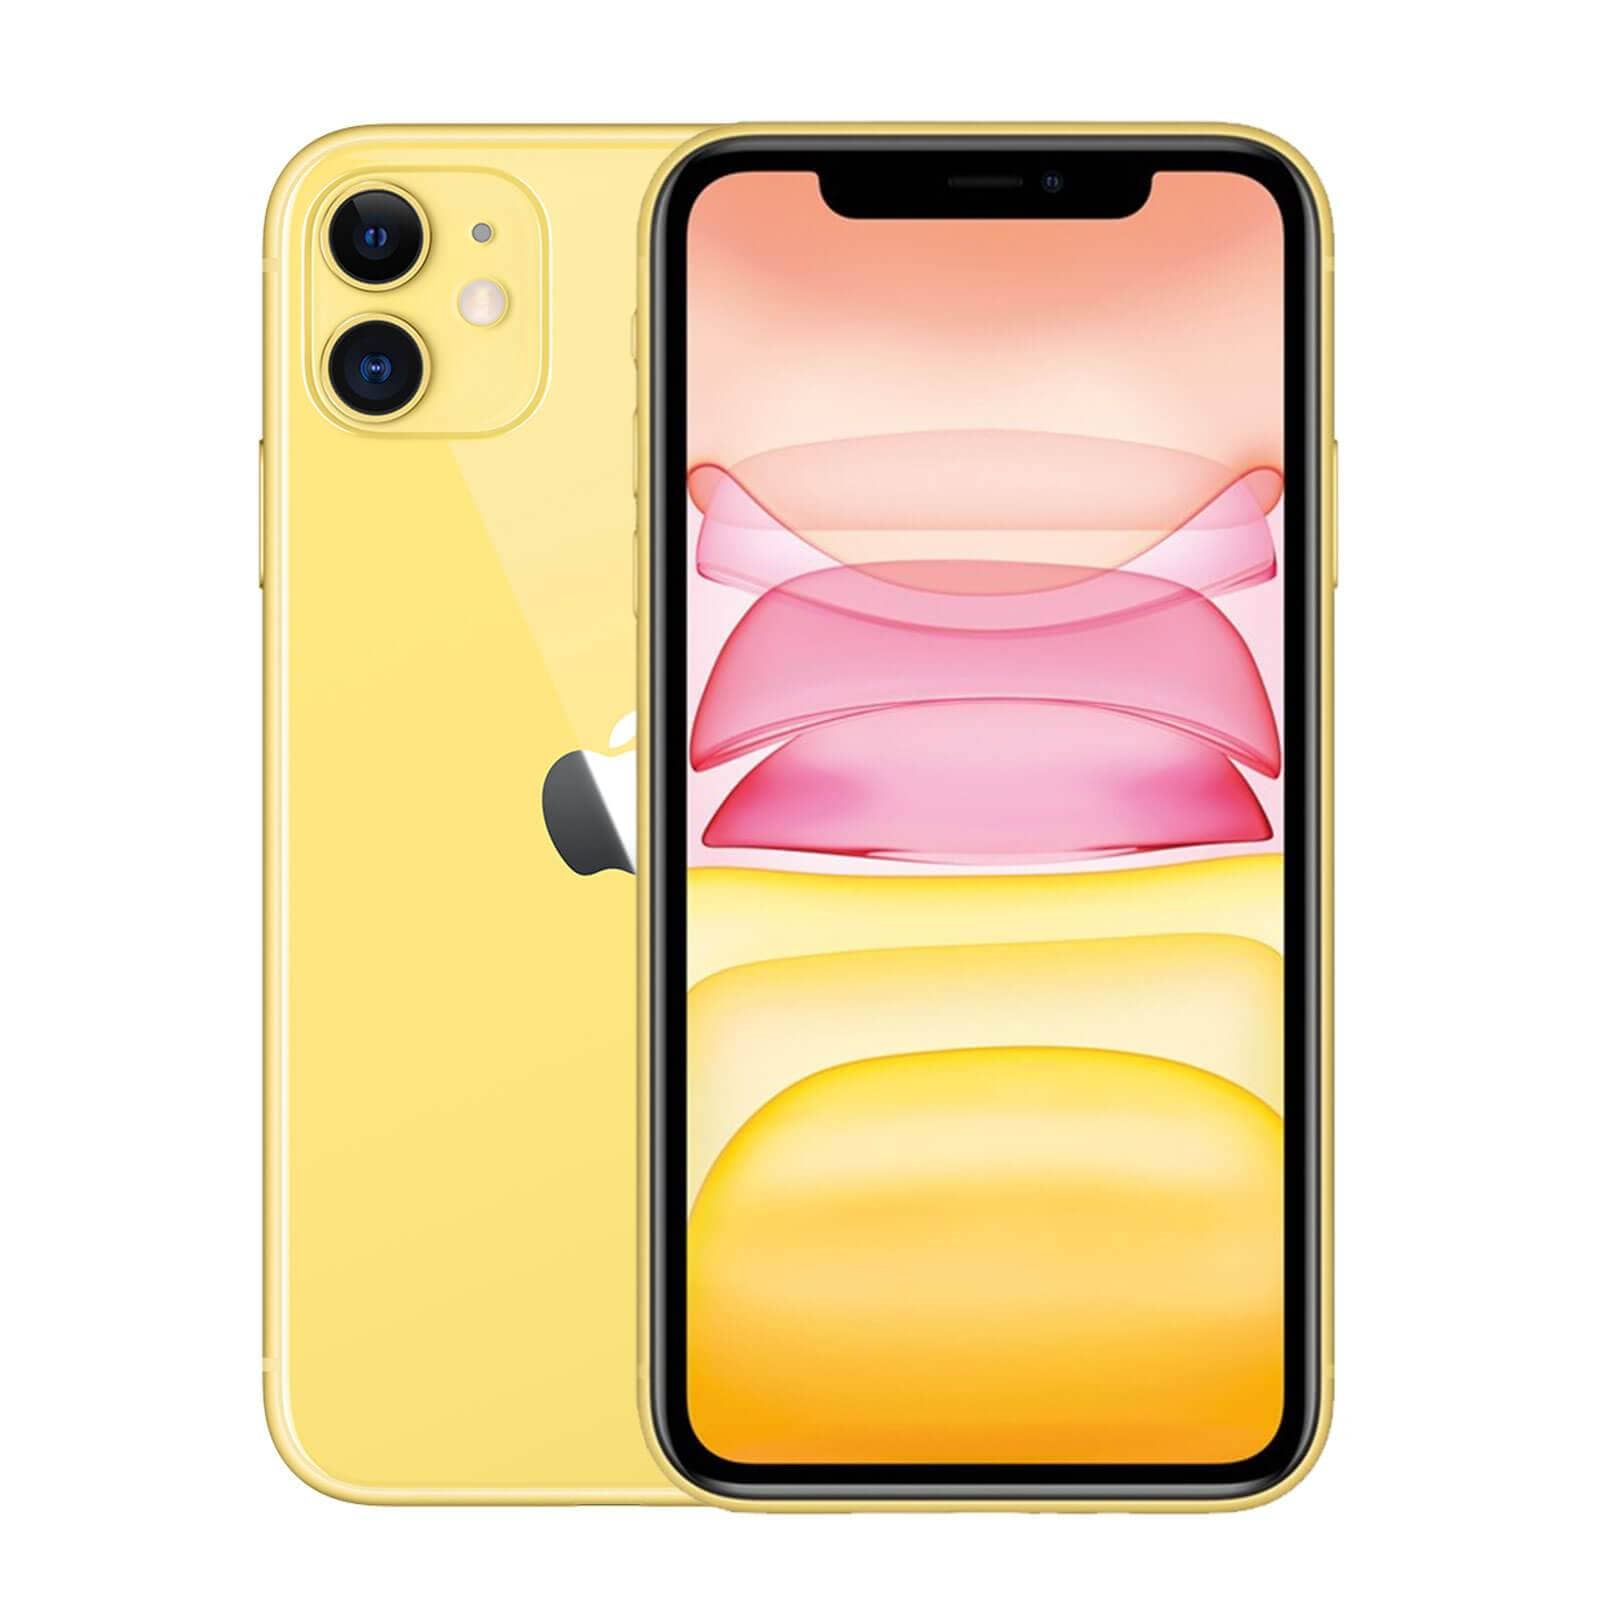 Apple iPhone 11 256GB Yellow Good - Unlocked 256GB Yellow Good